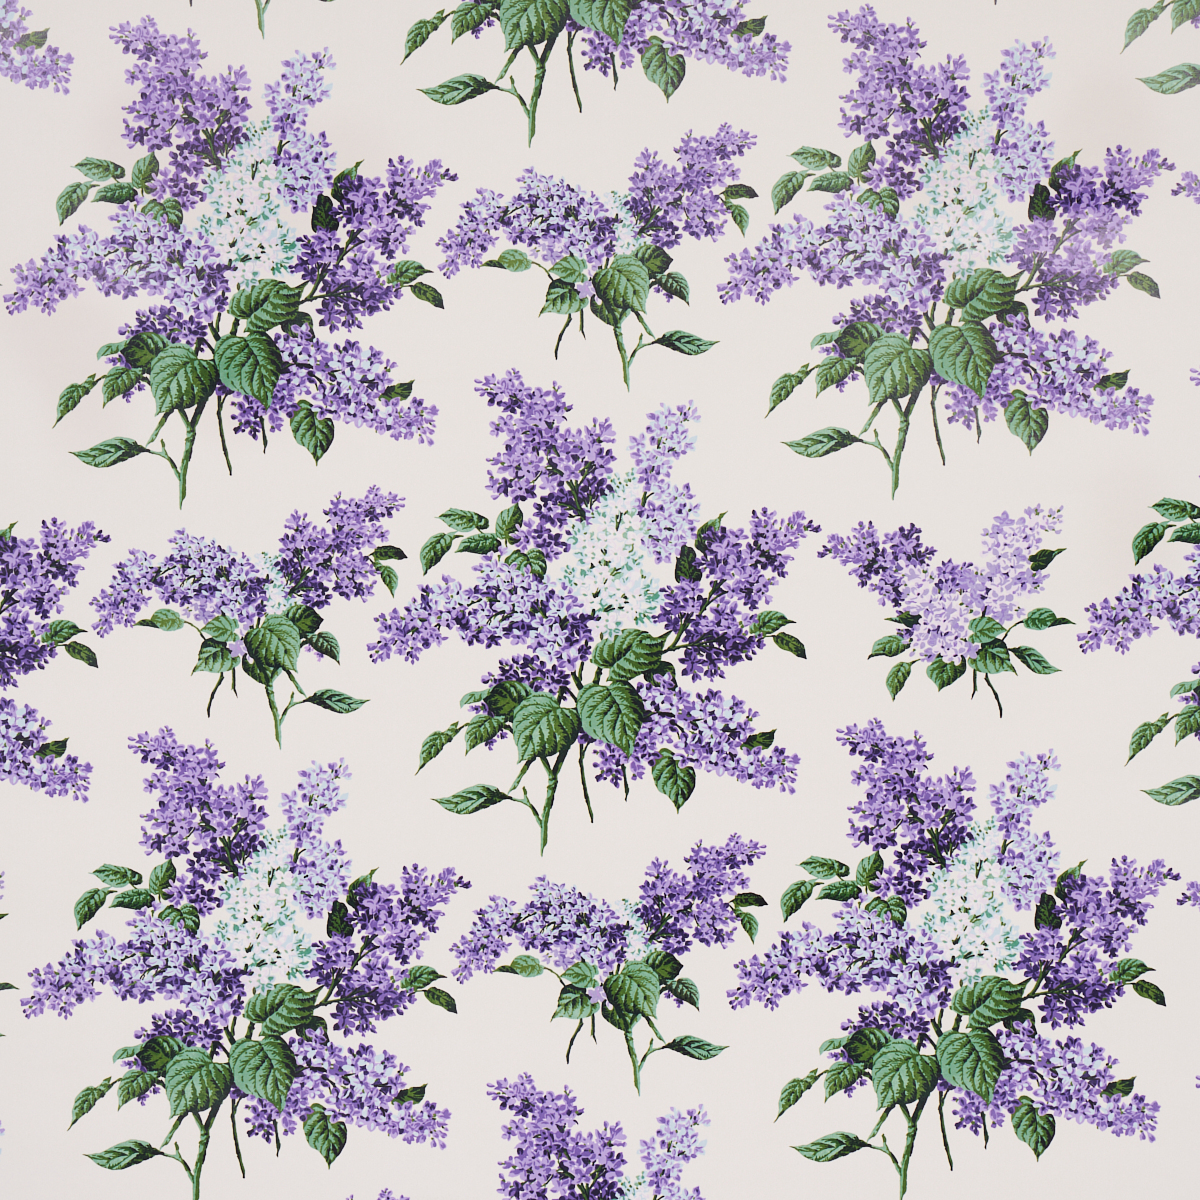 Proust's Lilacs by Johnson Hartig for Libertine for Schumacher